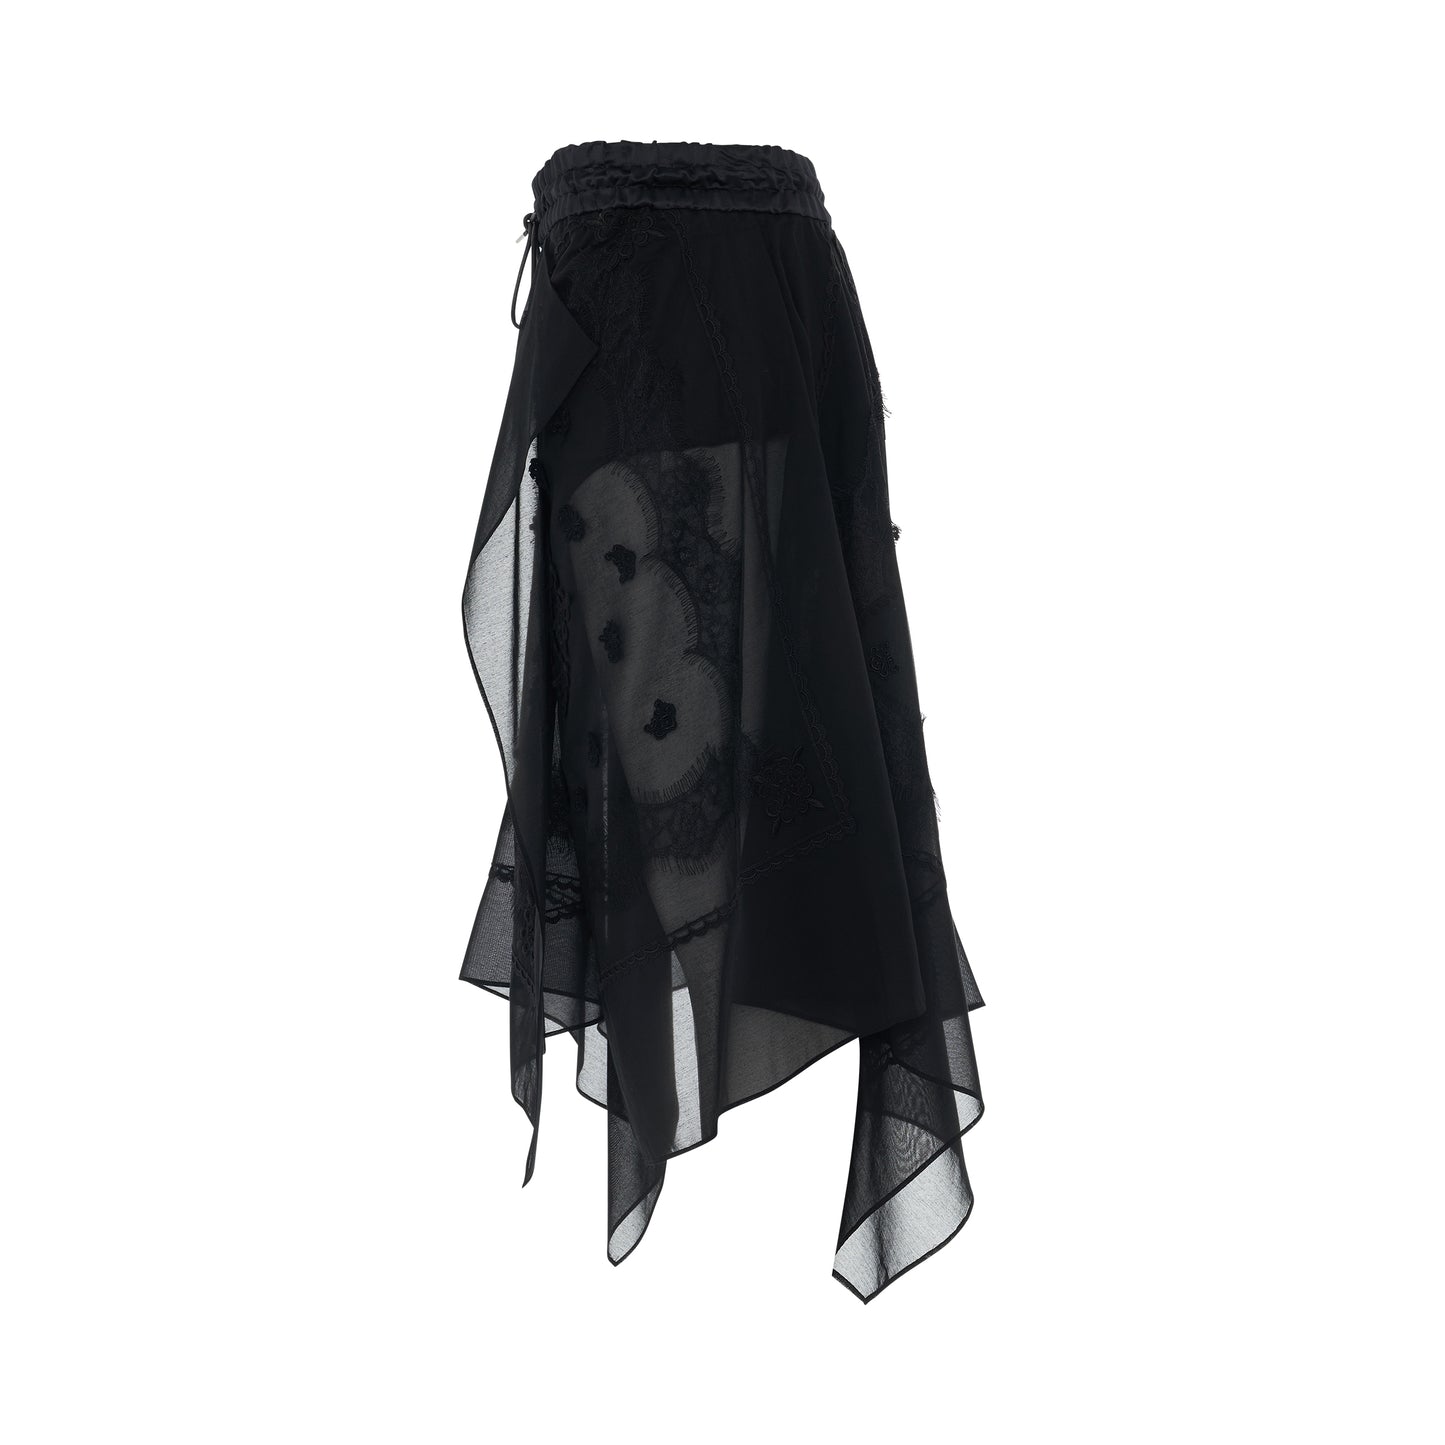 Bandana Lace Skirt in Black